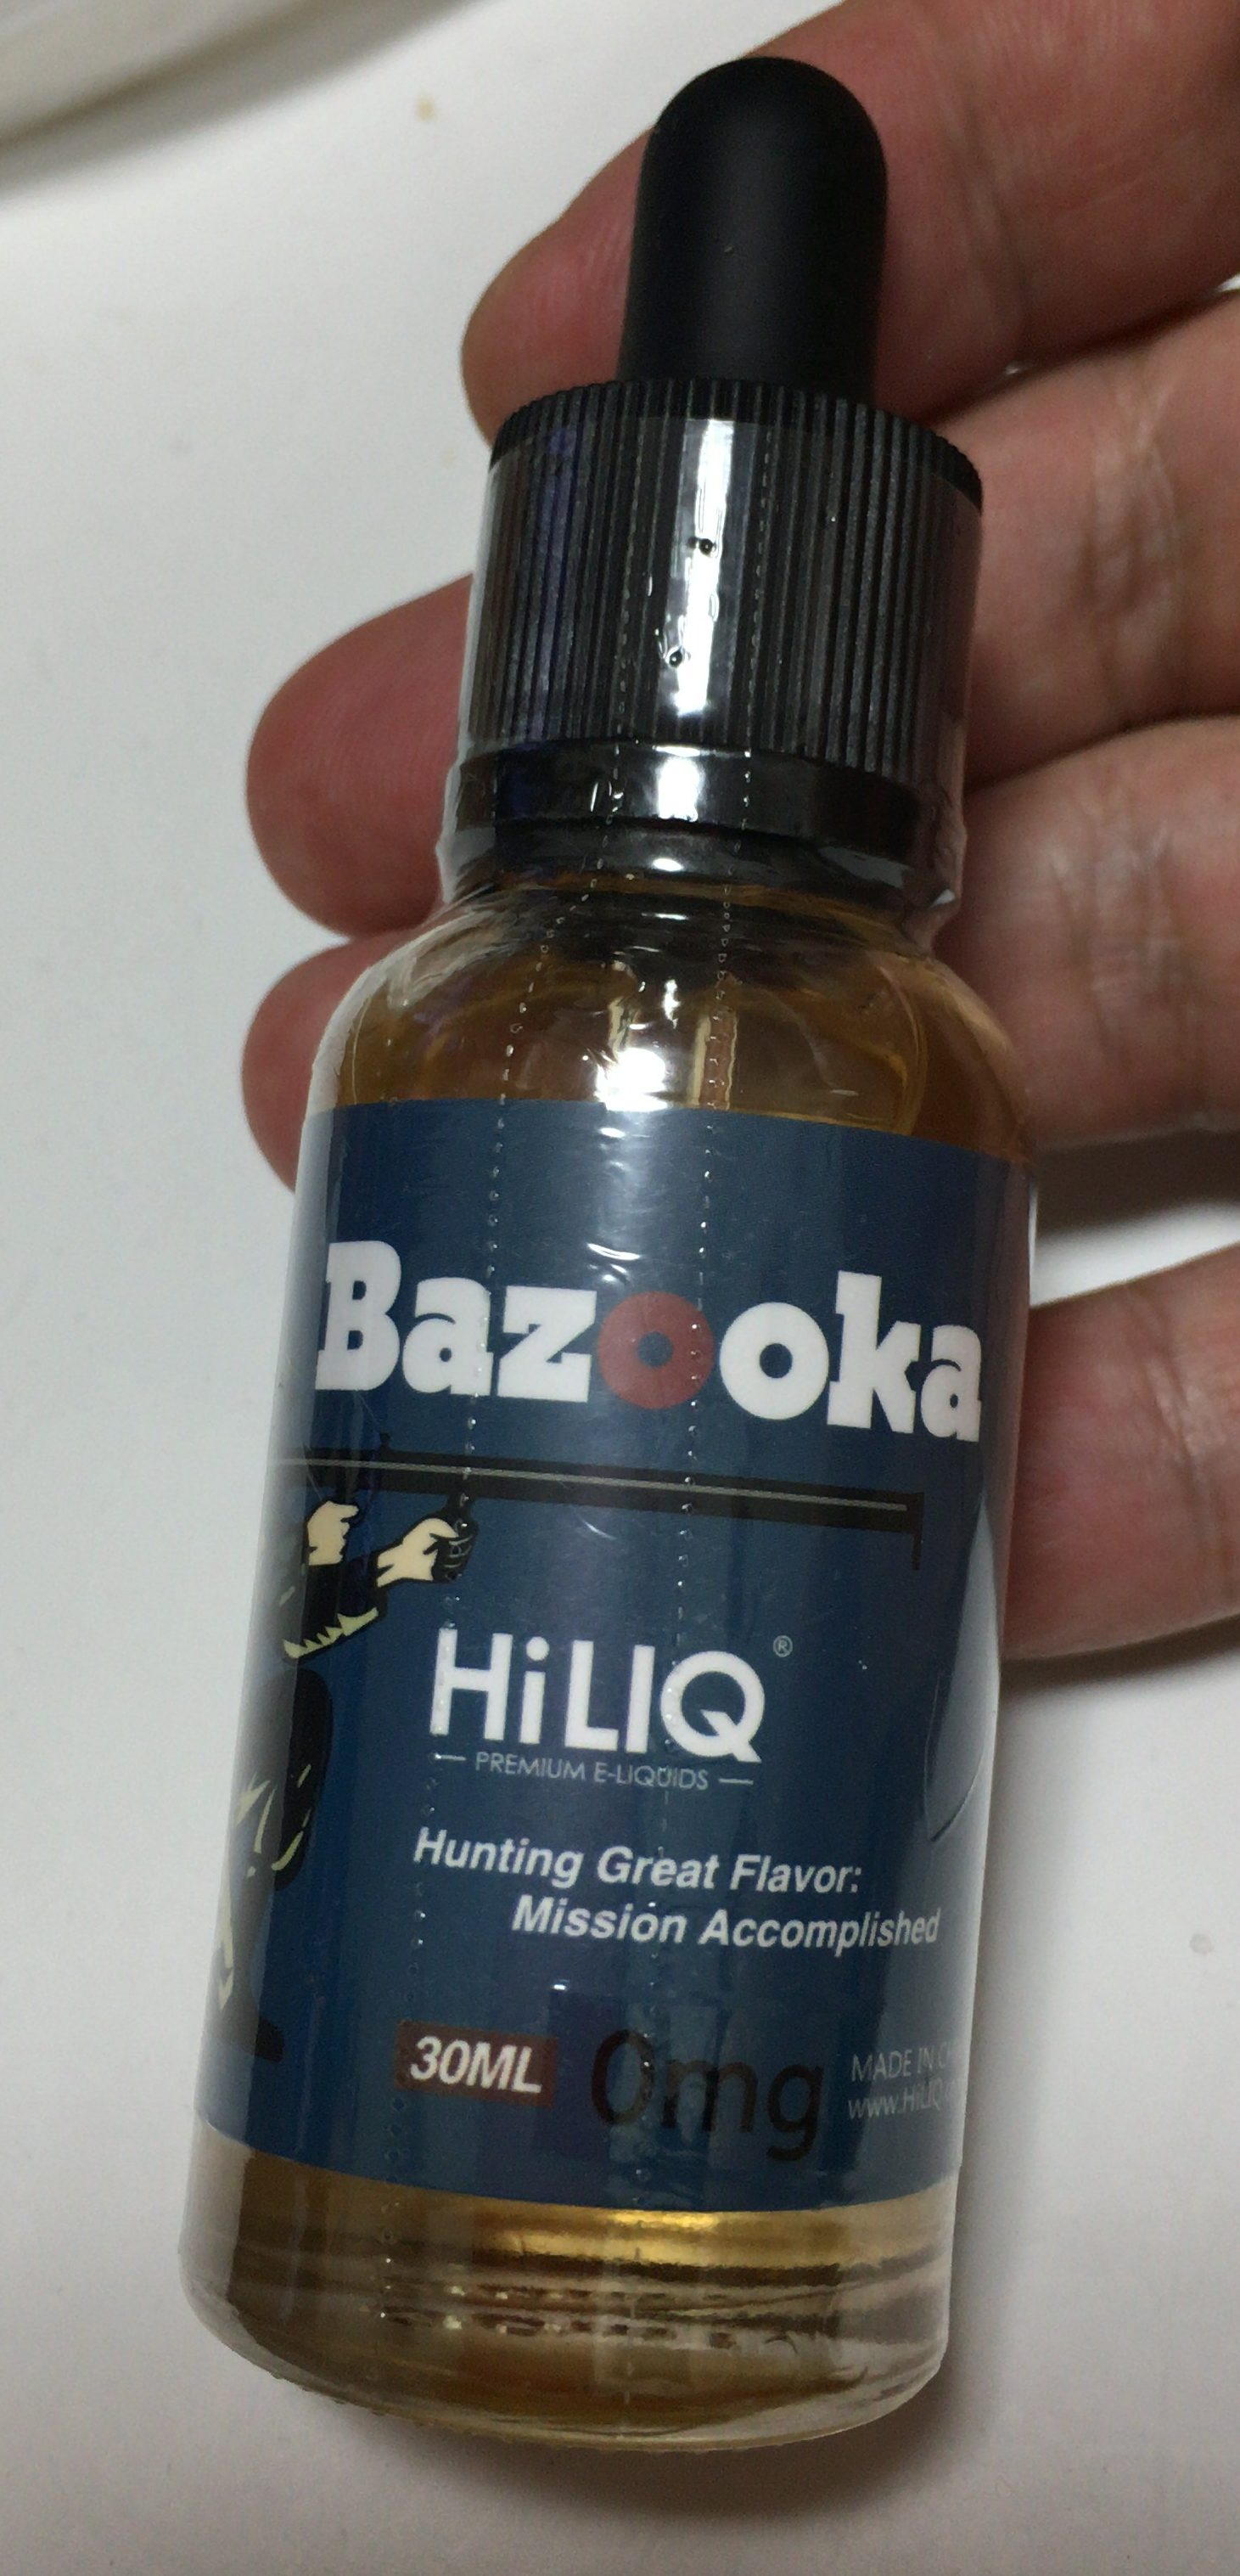 HiLIQプレミアム Bazooka – ピーチフレーバーのタバコ系リキッド